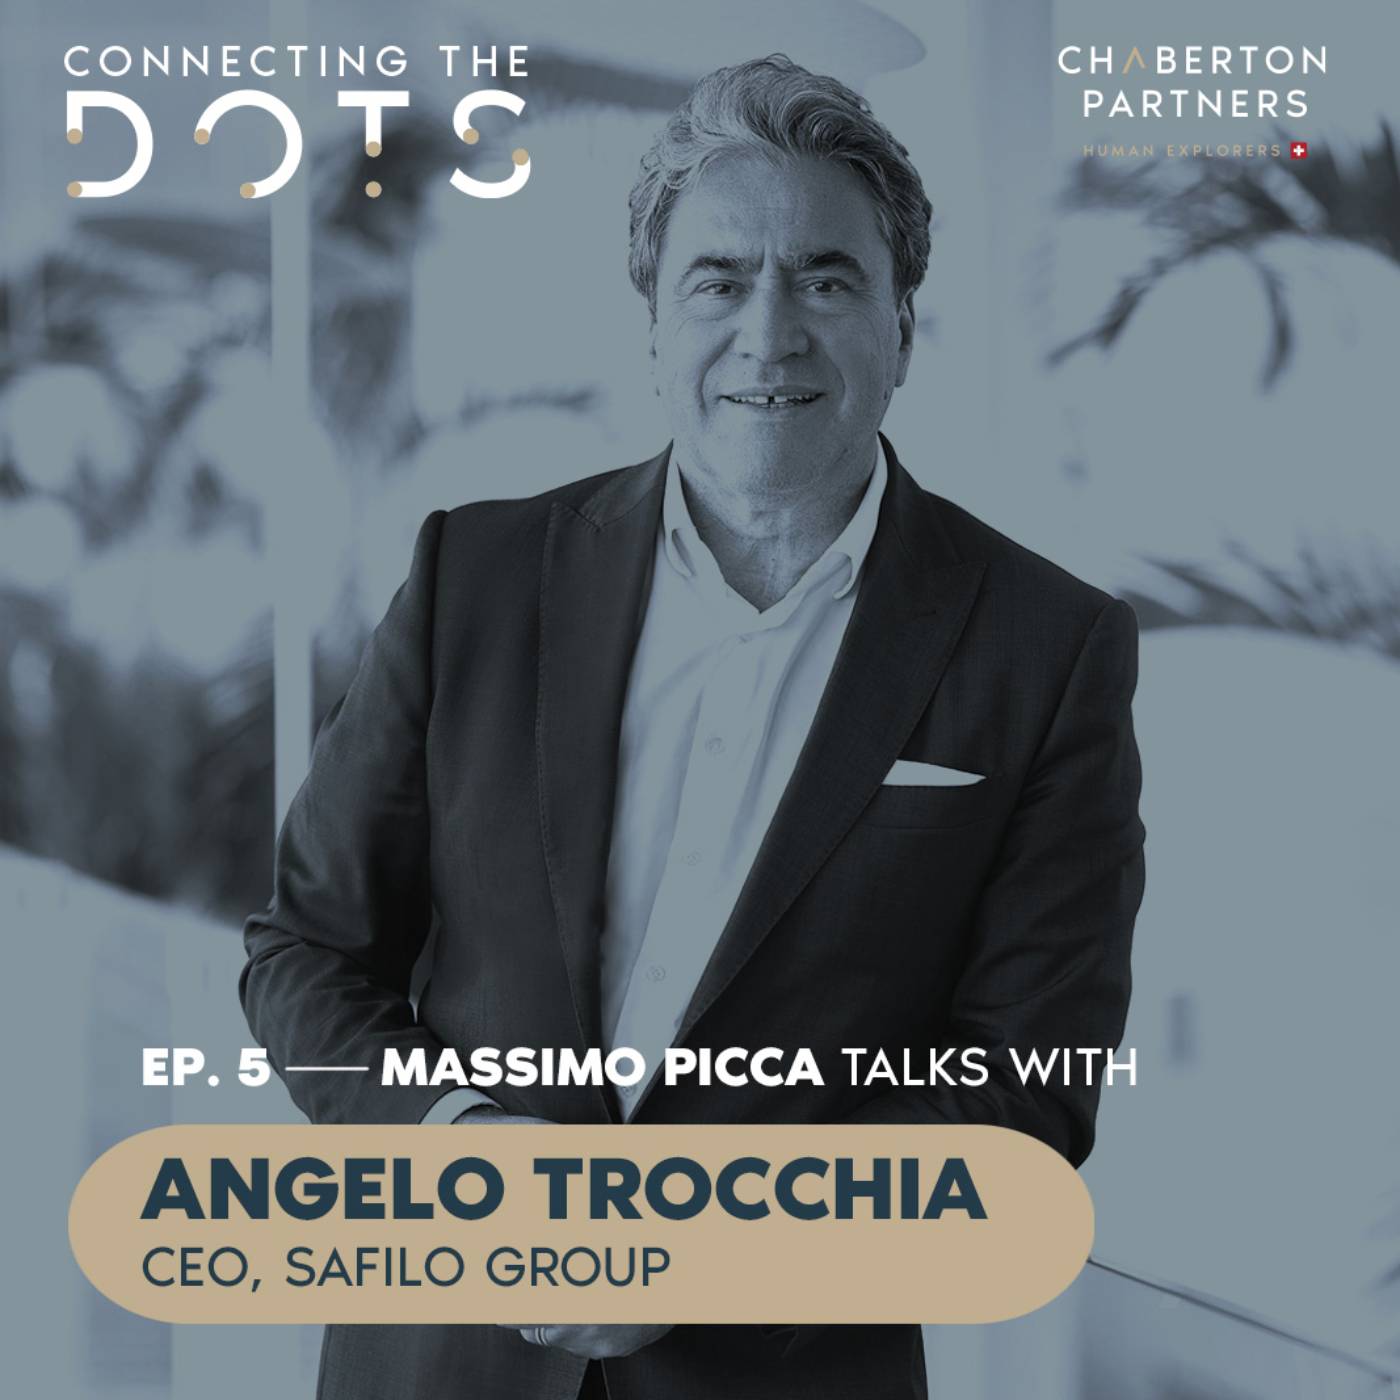 Massimo Picca talks with Angelo Trocchia - CEO of SAFILO GROUP Artwork